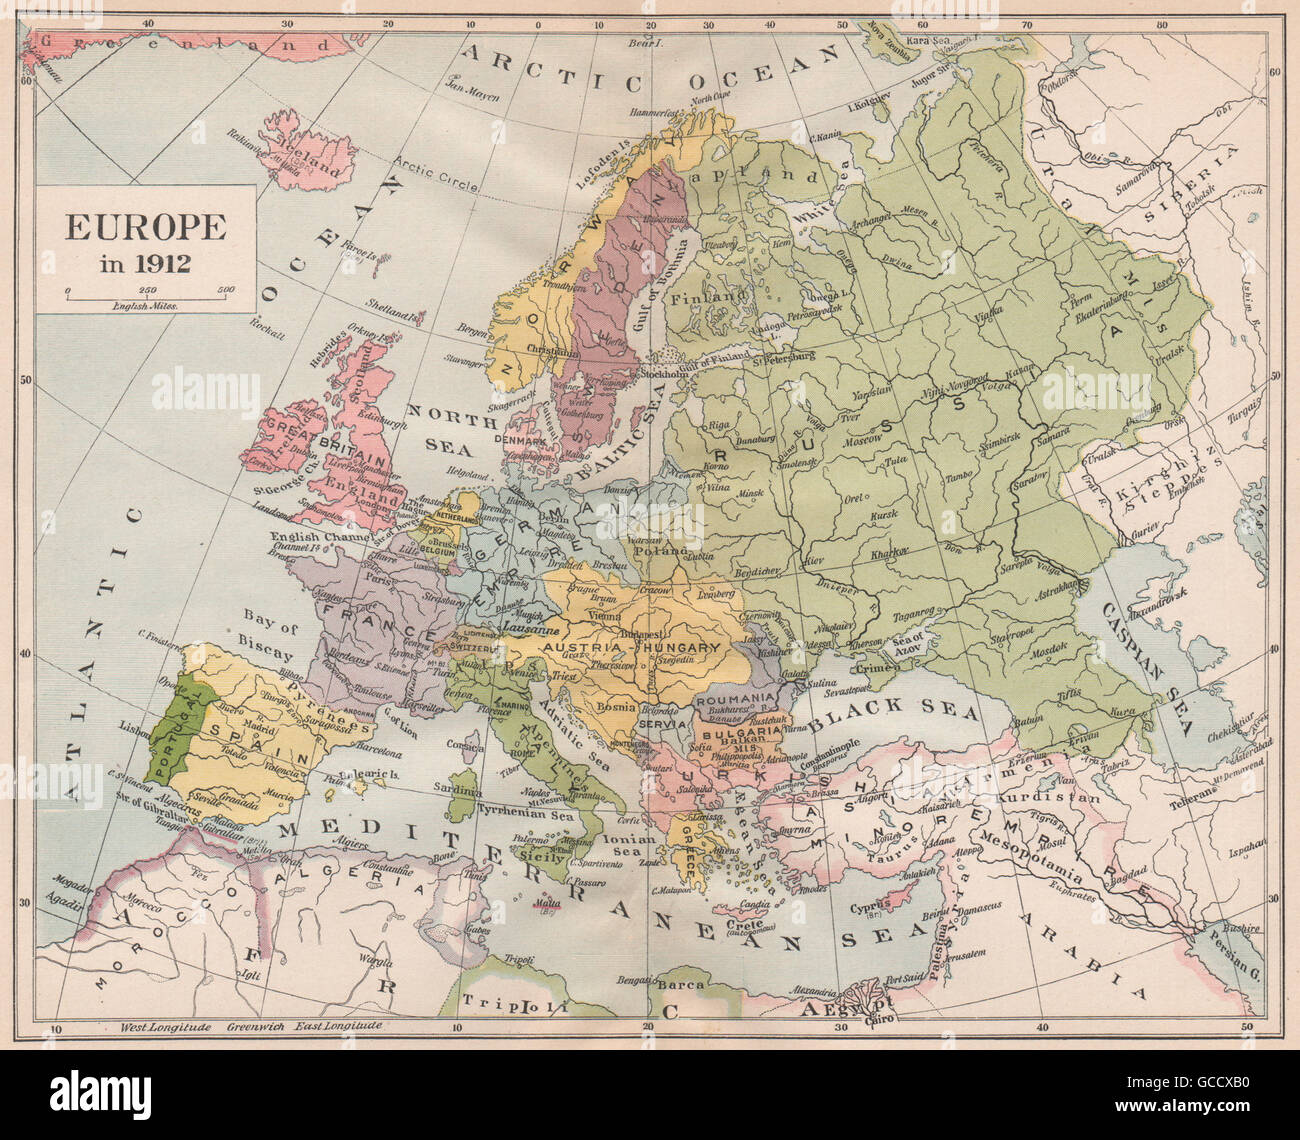 Hoofdkwartier Zeldzaamheid wassen EUROPE 1912. Austria-Hungary German & Turkish Empires, 1917 vintage map  Stock Photo - Alamy